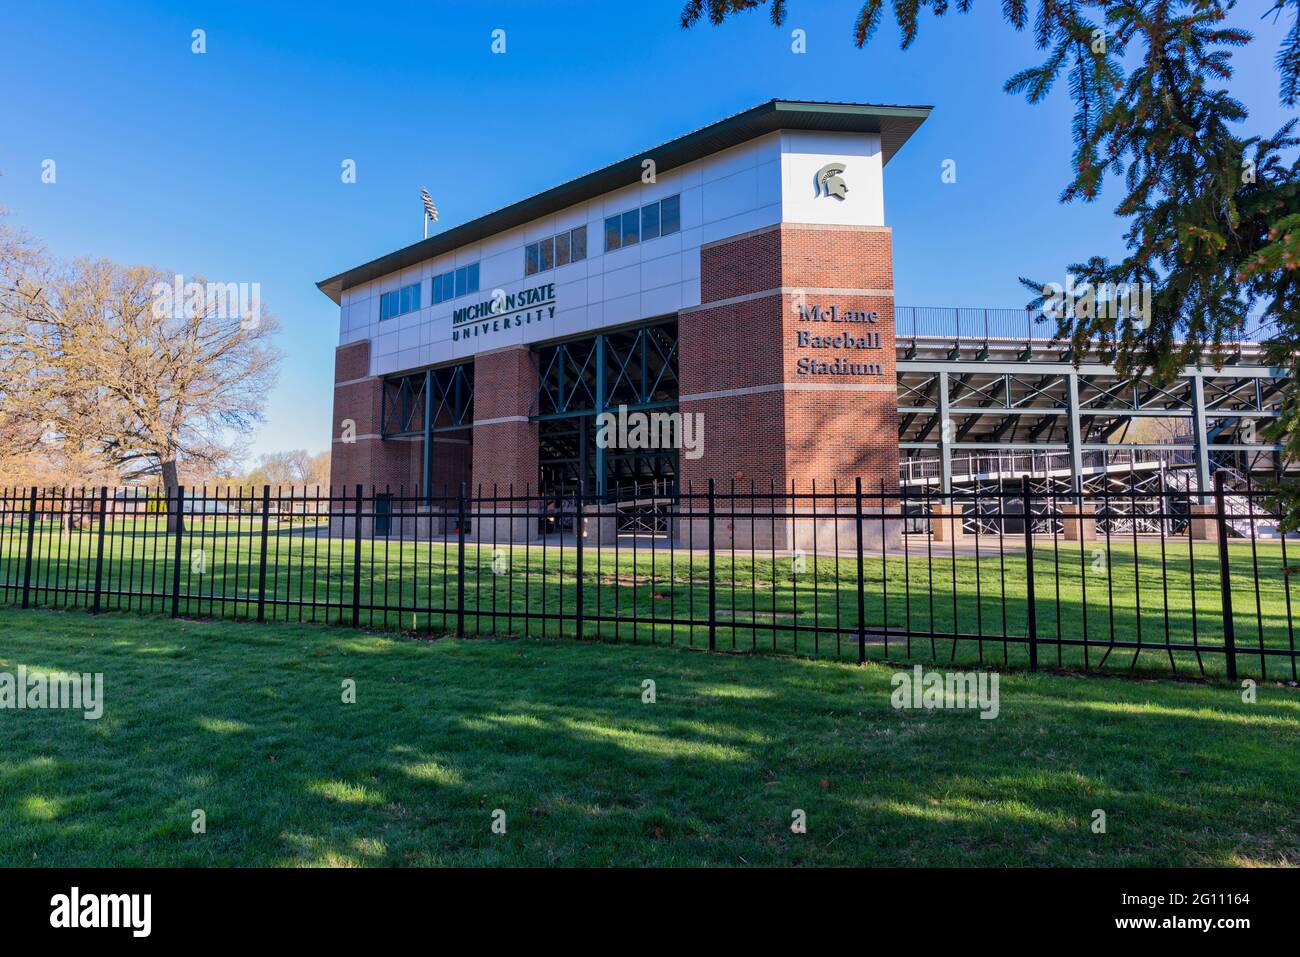 McLane Baseball Stadium On The Campus Of Michigan State University Stock Photo Alamy